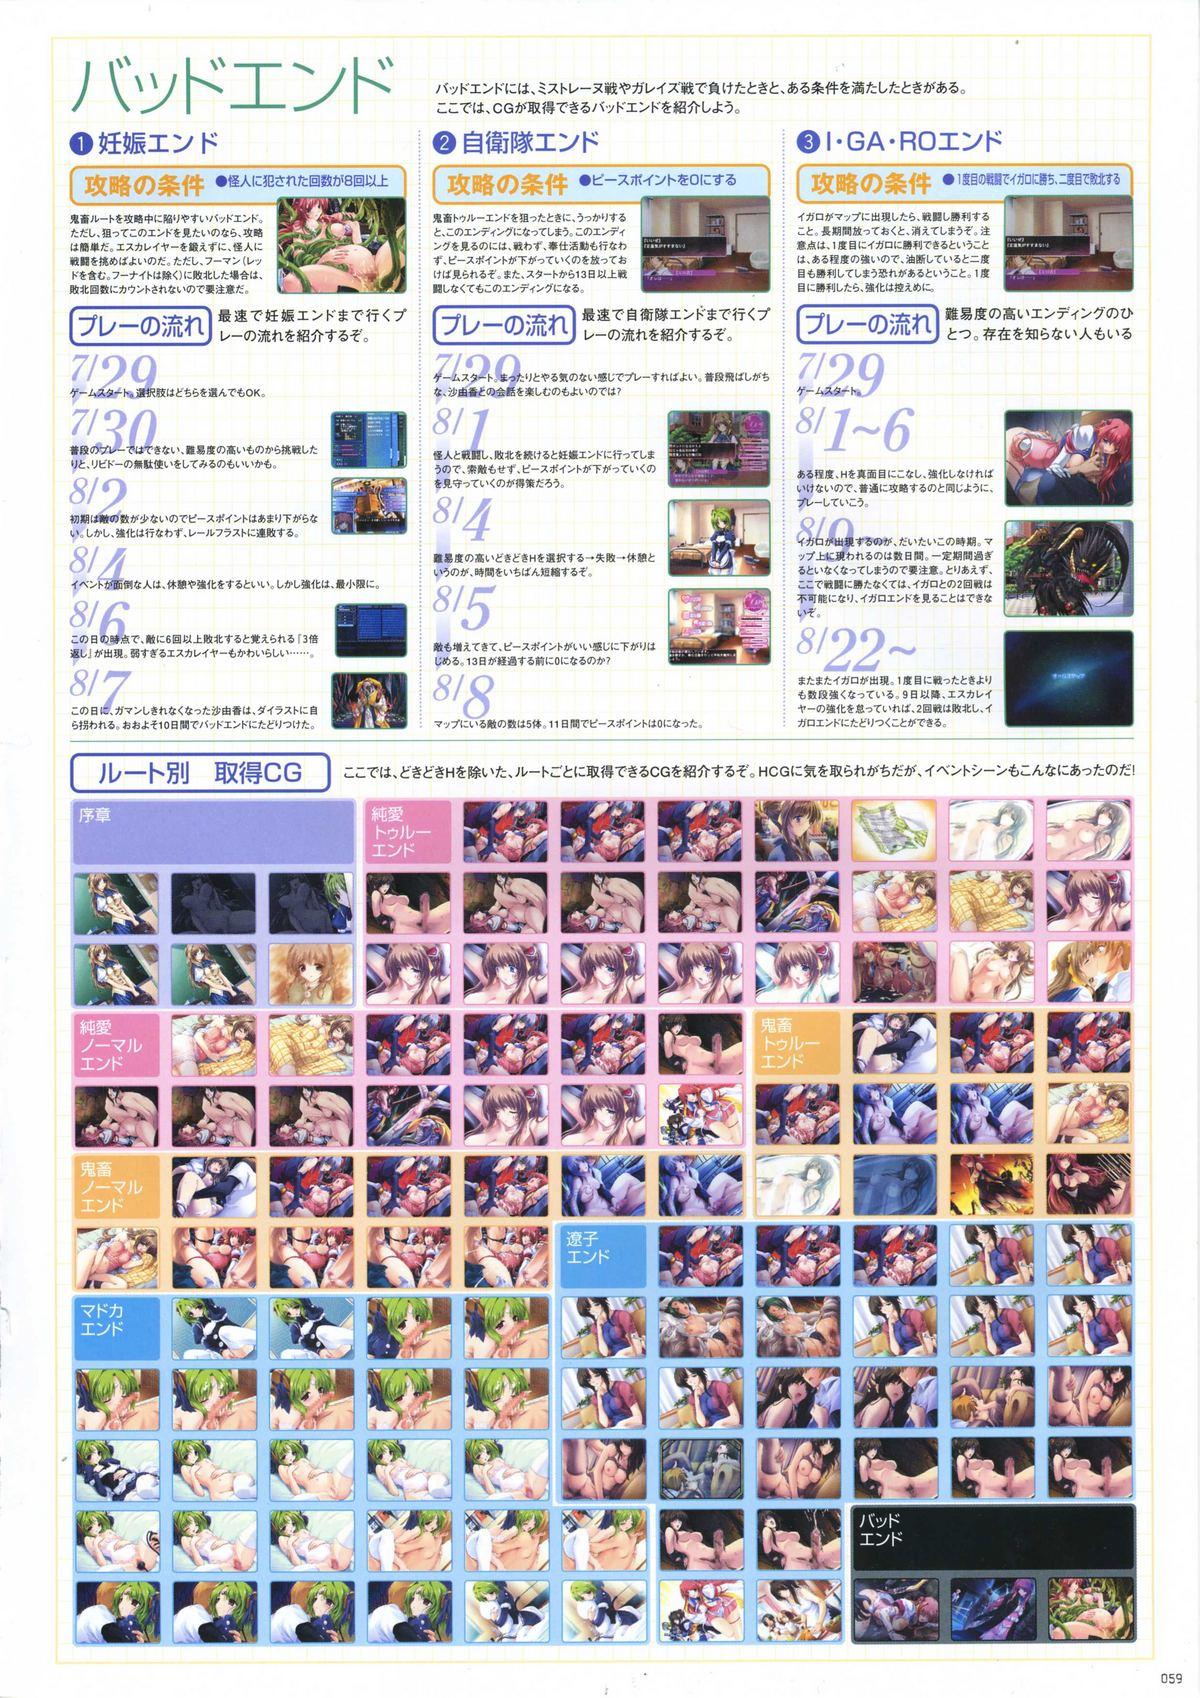 Choukou Tenshi Escalayer Visual Fanbook 66